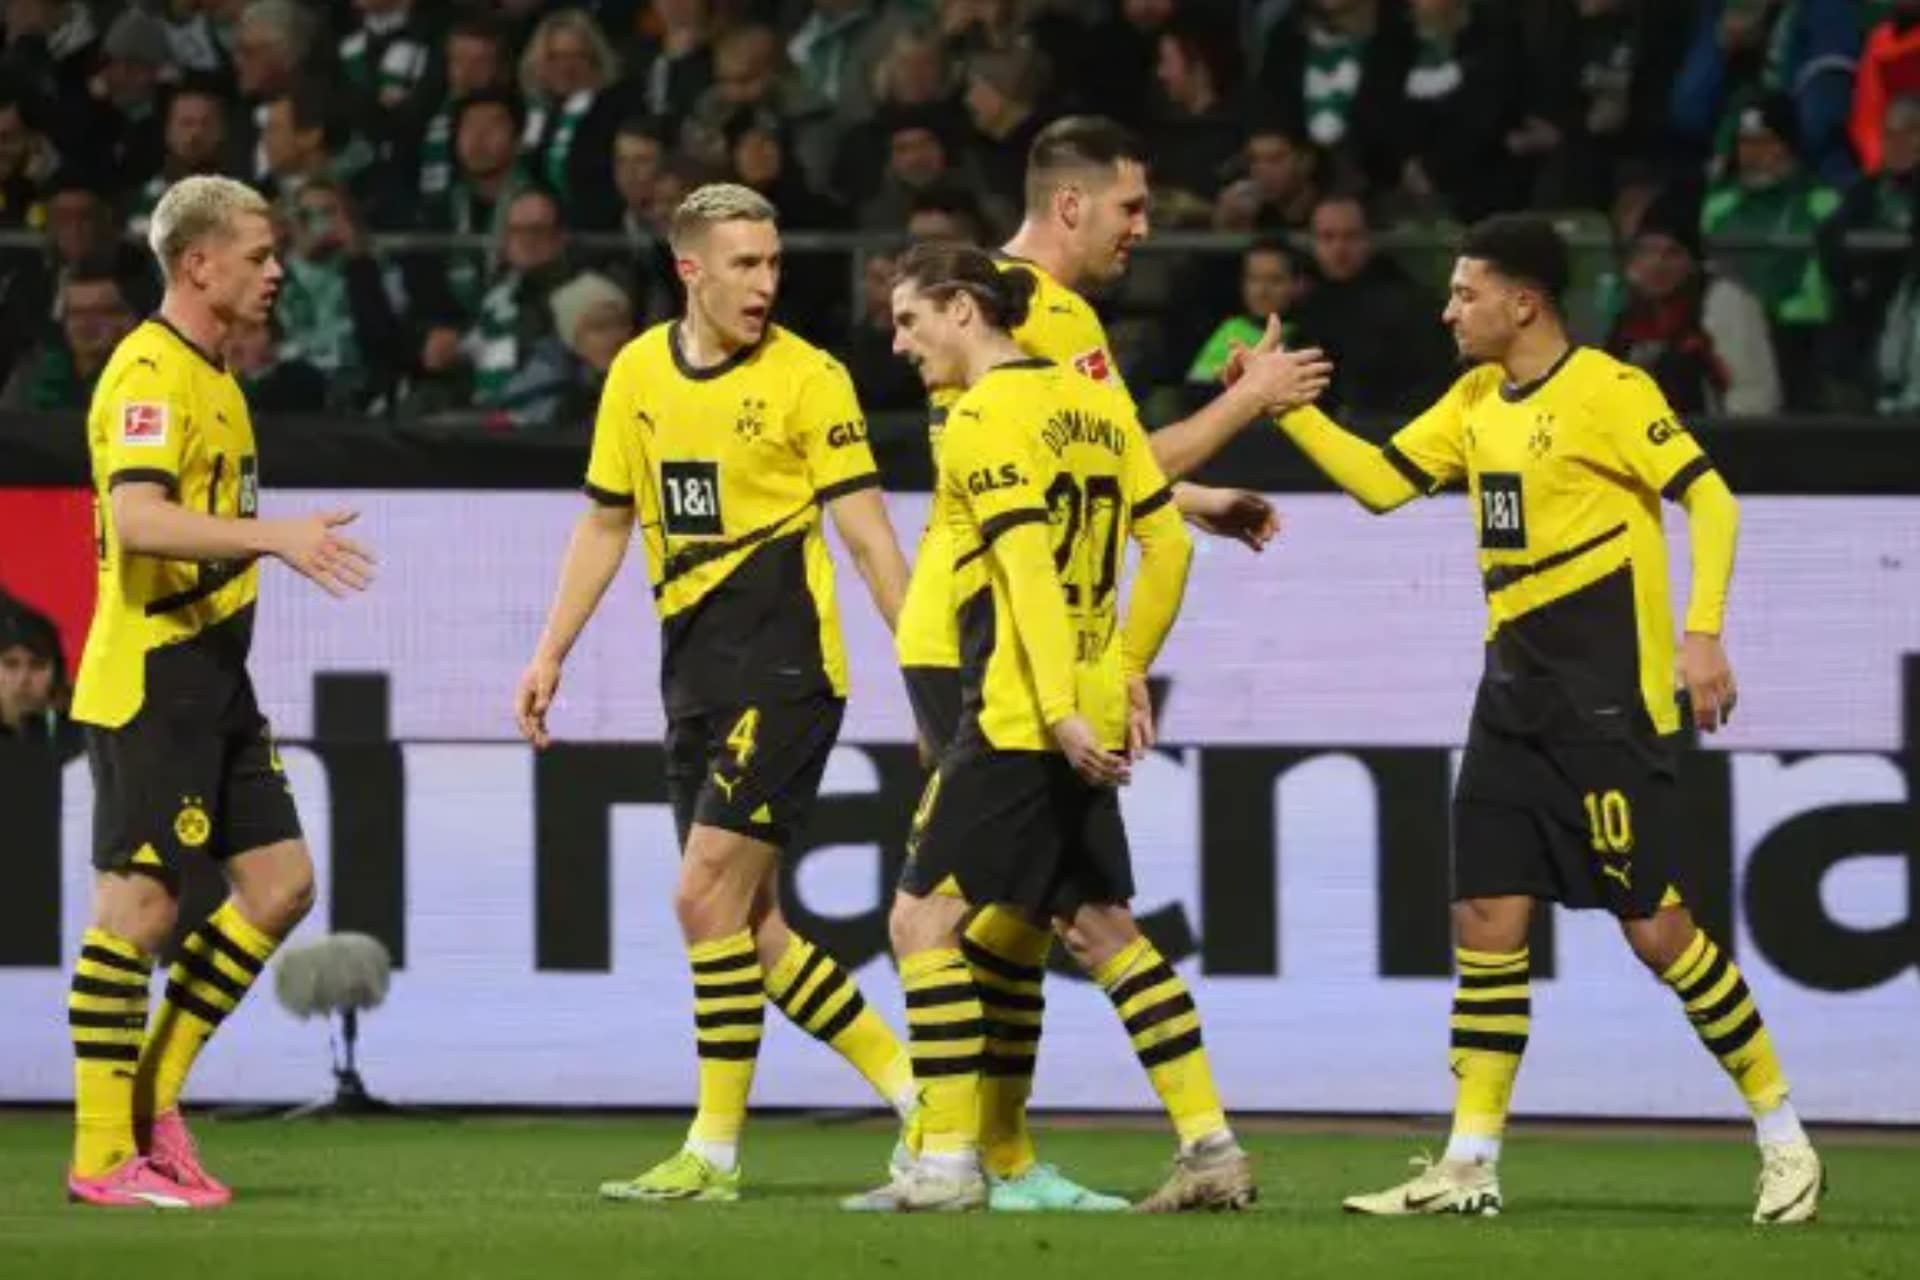 Dortmund hope to retain Sancho as player lacks desire to return to Man United